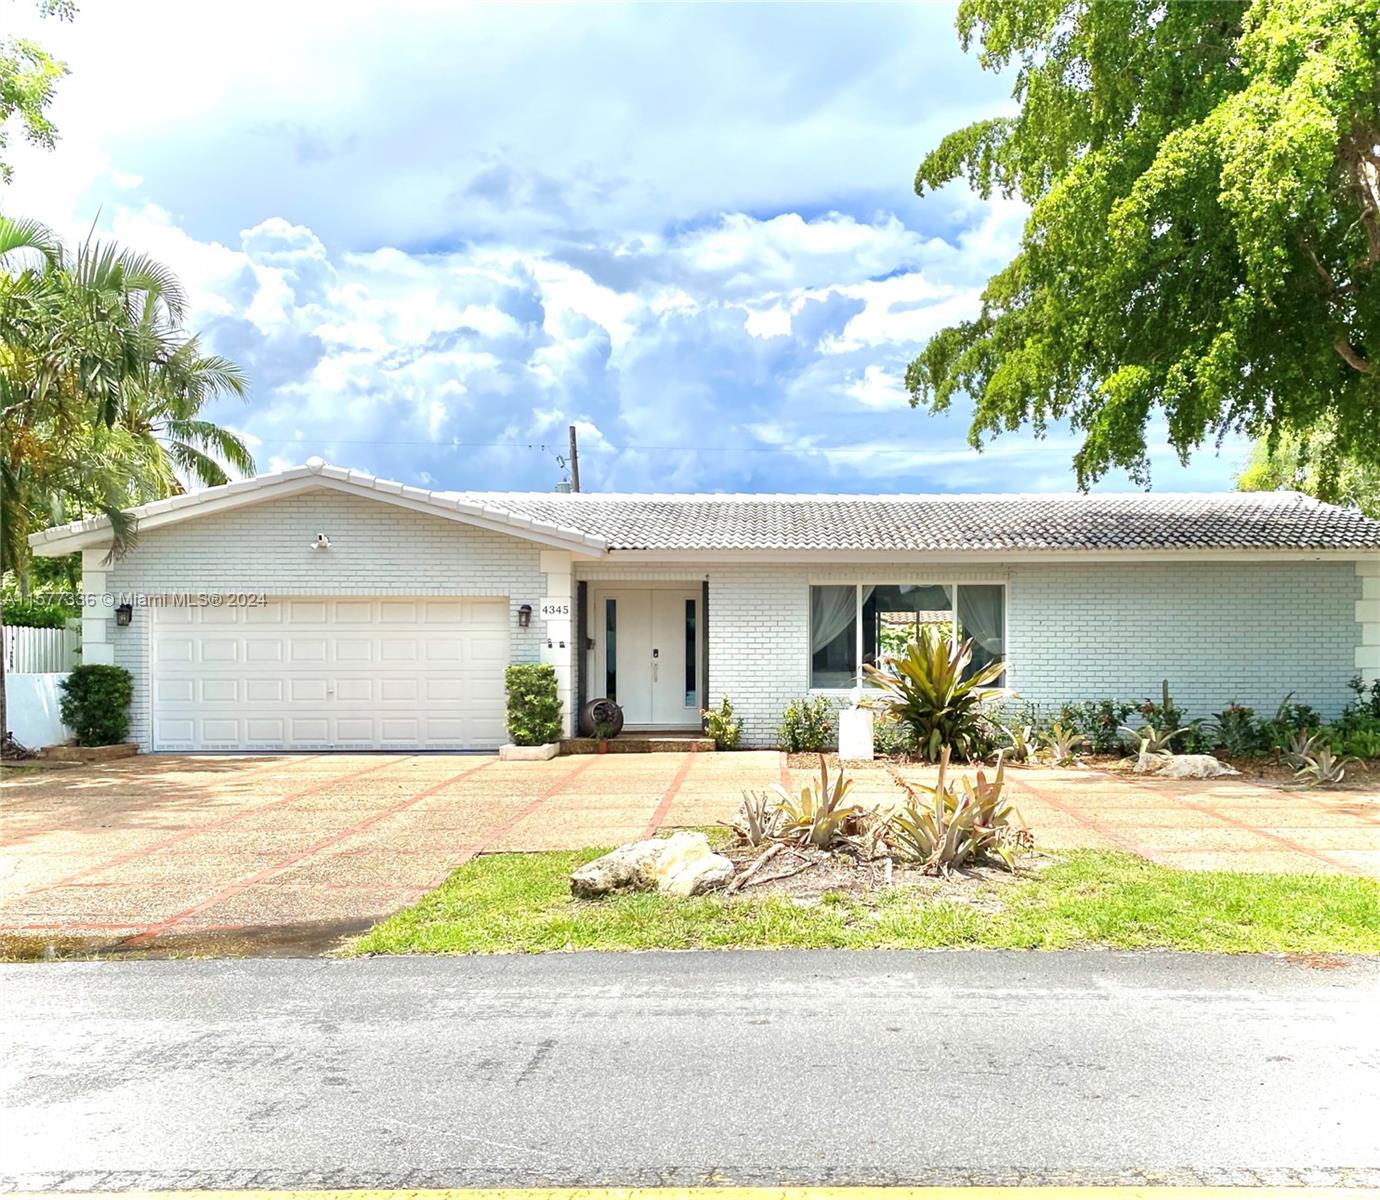 Rental Property at 4345 Ne 22nd Ave, Fort Lauderdale, Broward County, Florida - Bedrooms: 4 
Bathrooms: 2  - $8,500 MO.